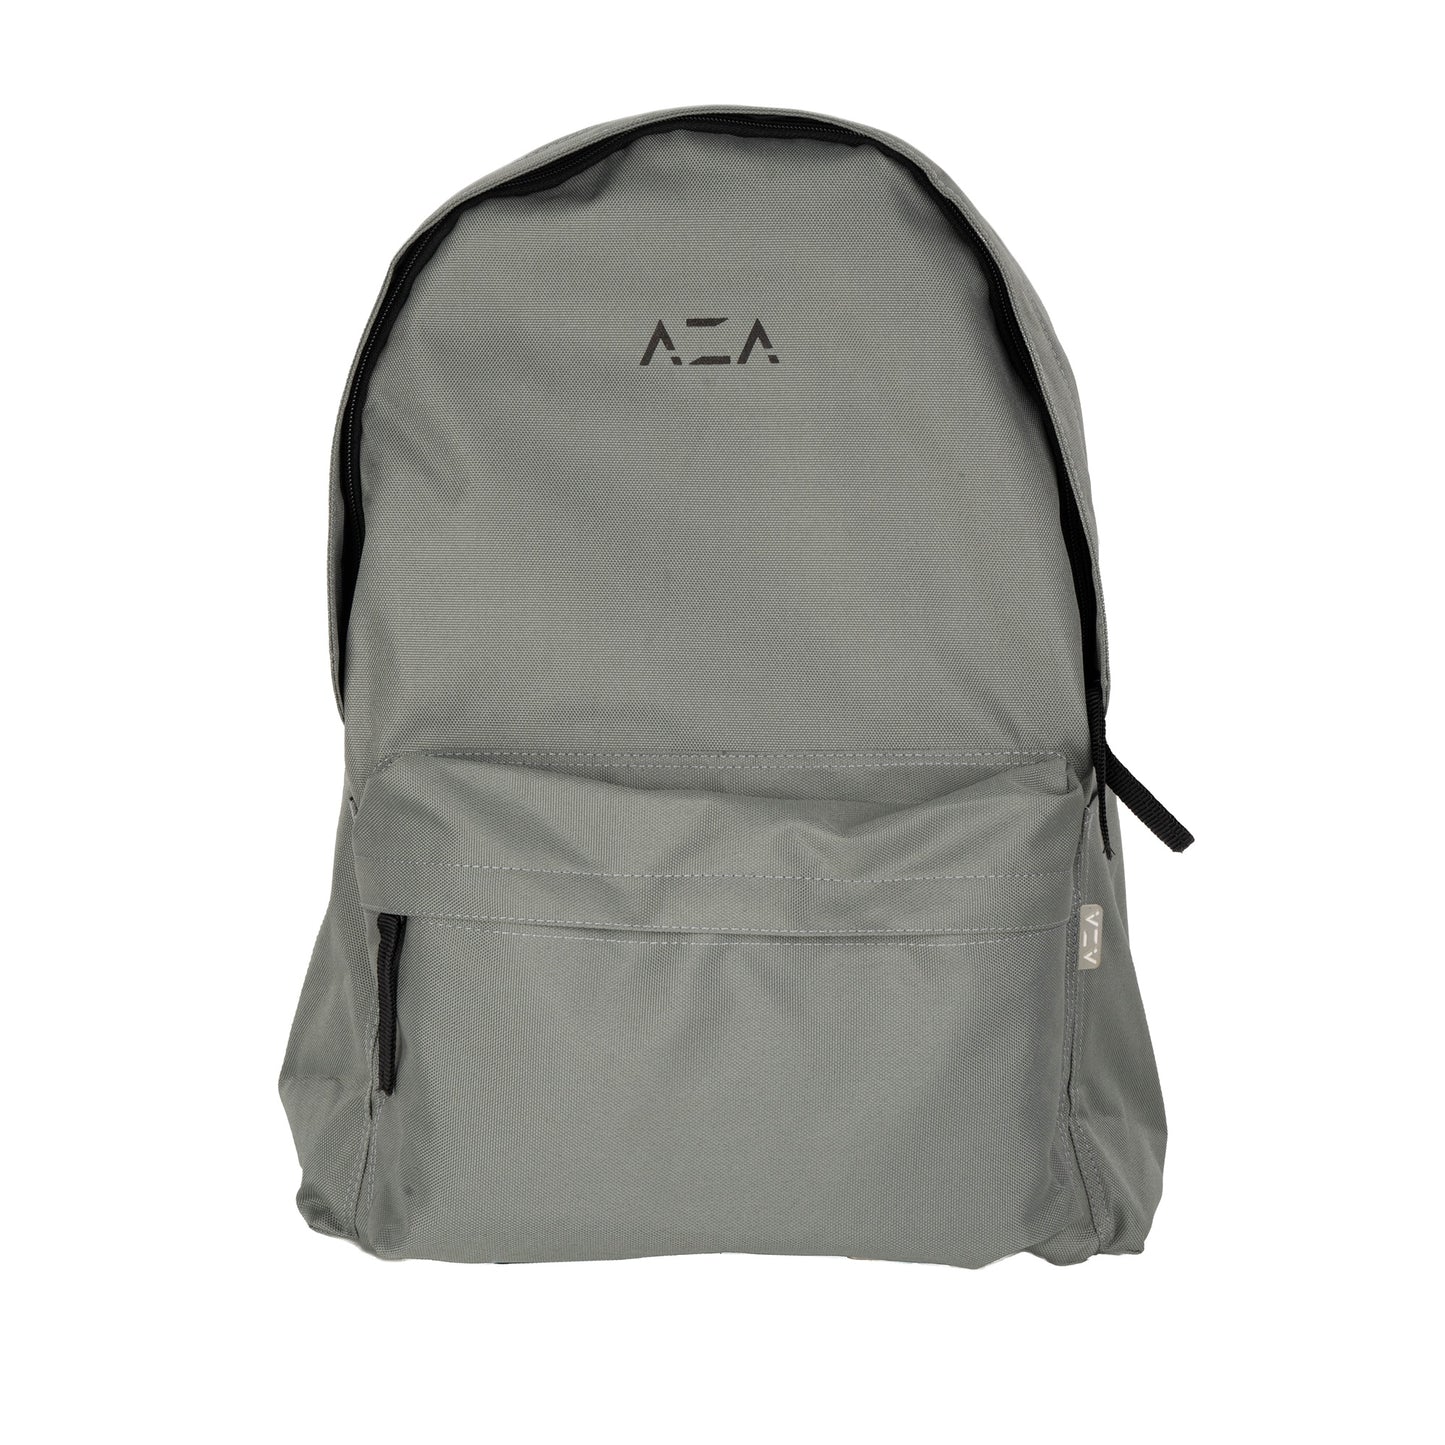 AZA Daypack Bag - Grey